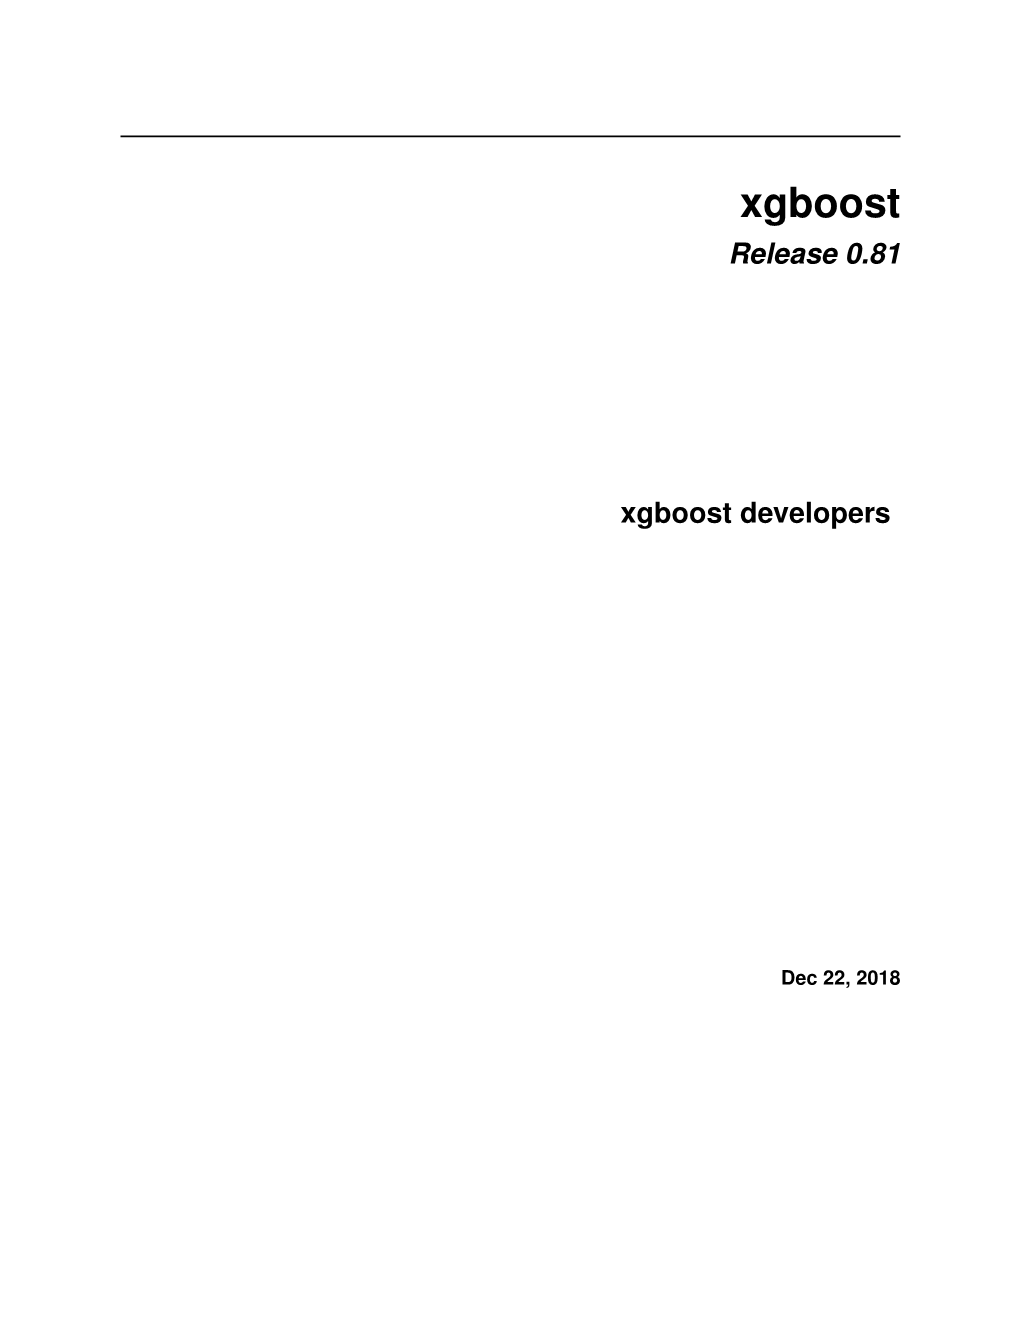 Release 0.81 Xgboost Developers